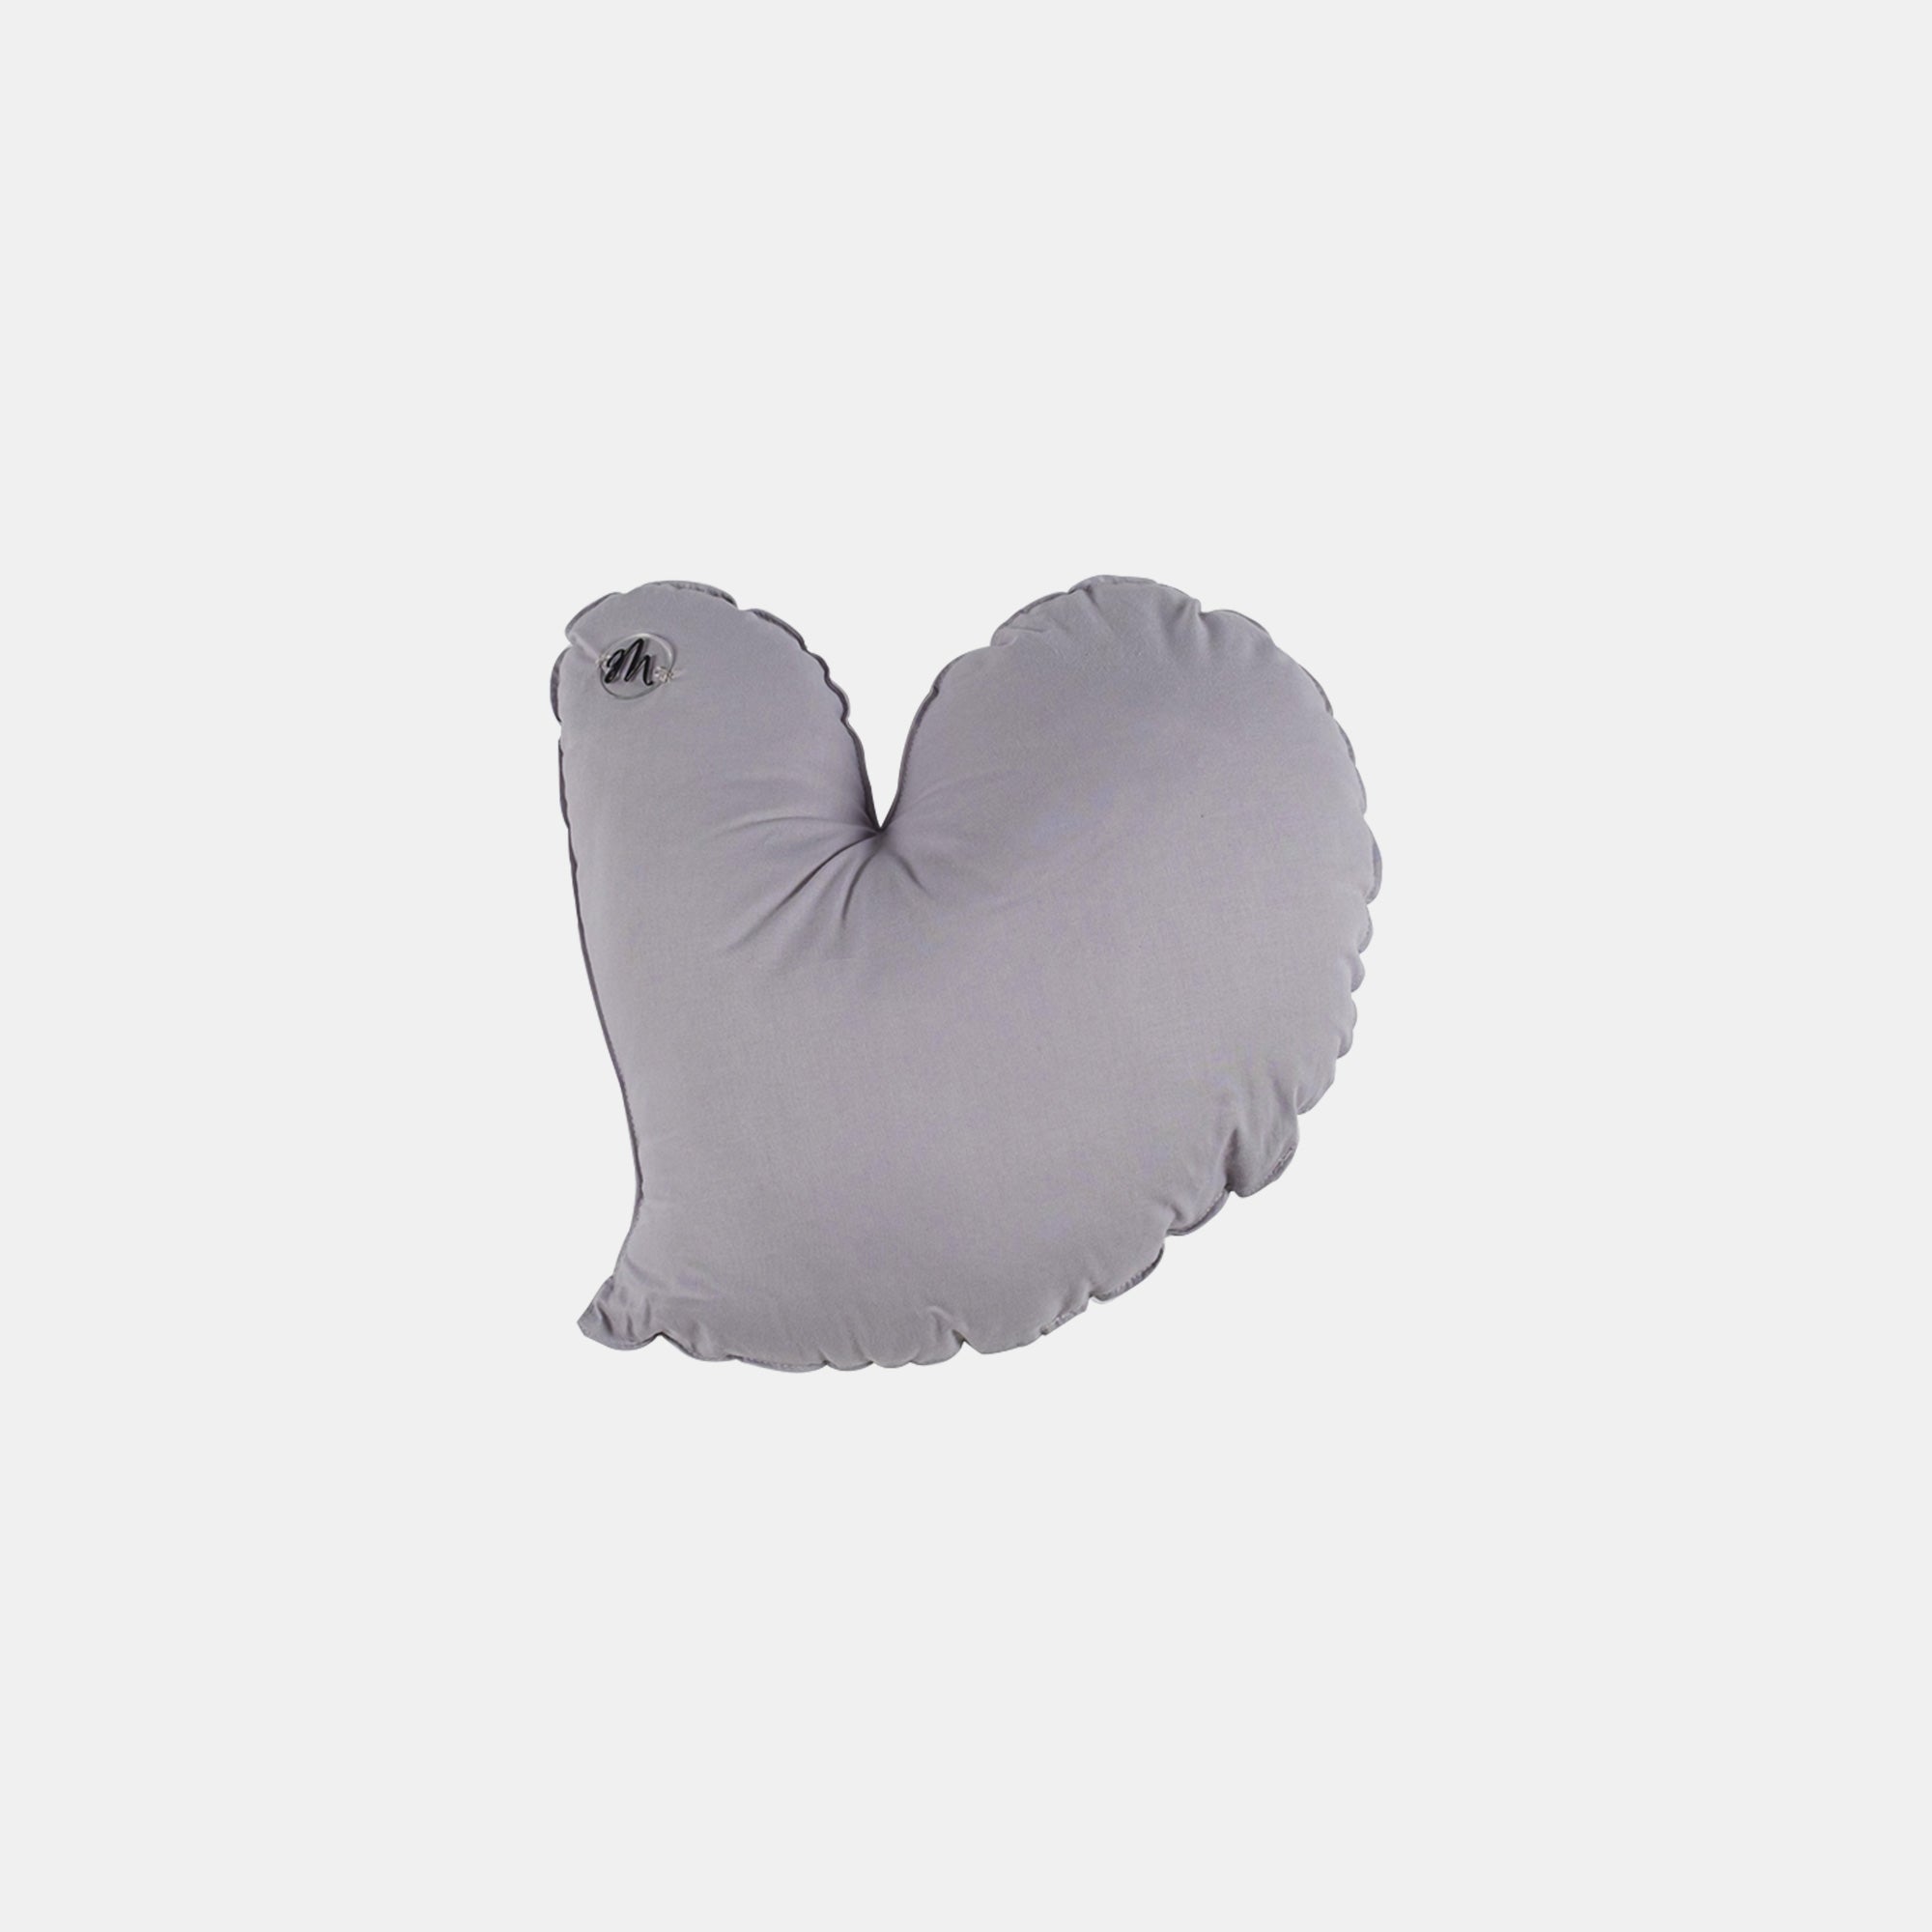 Handmade heart-shaped cushion